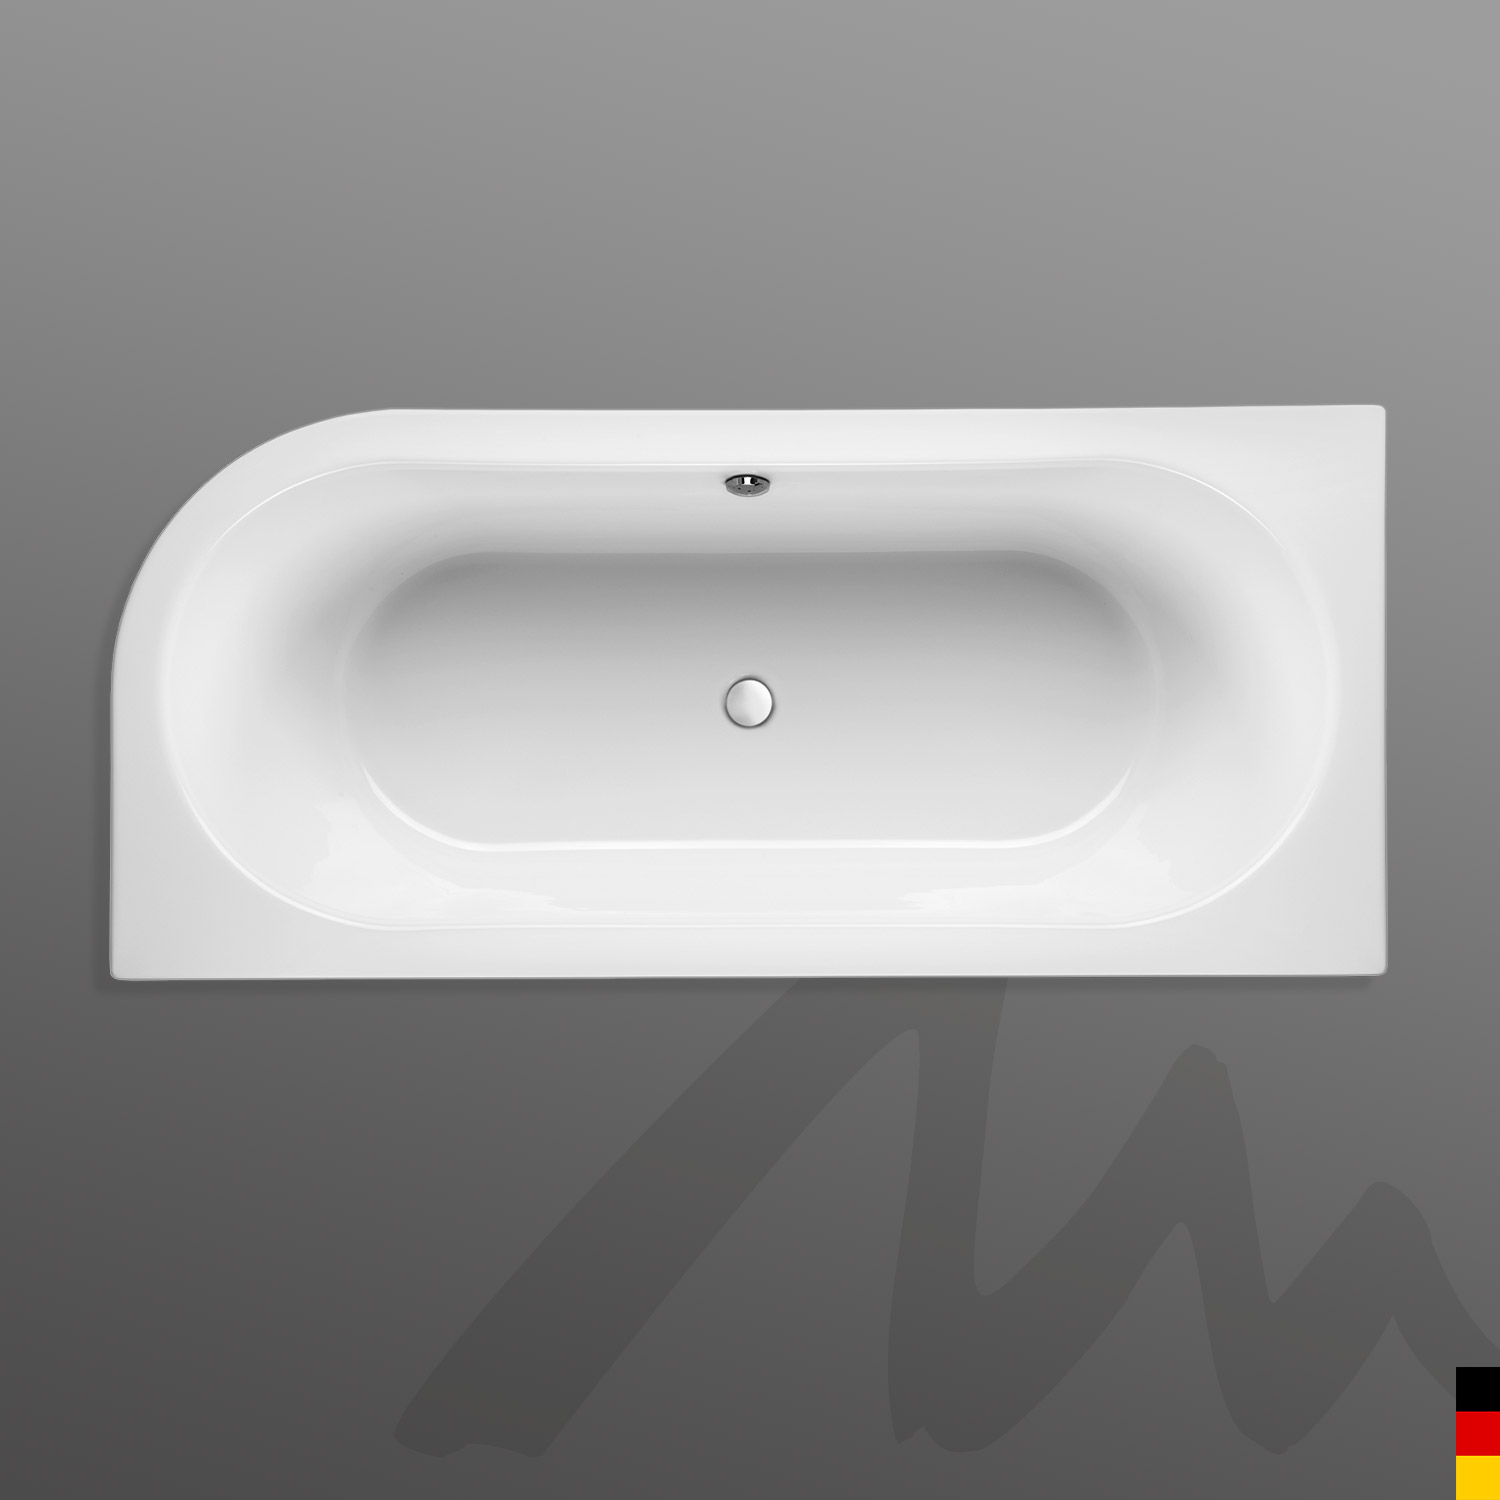 Mauersberger Badewanne Oval Primo 1 - 180/80 duo Ausführung rechts  180x80x45  Farbe:weiß